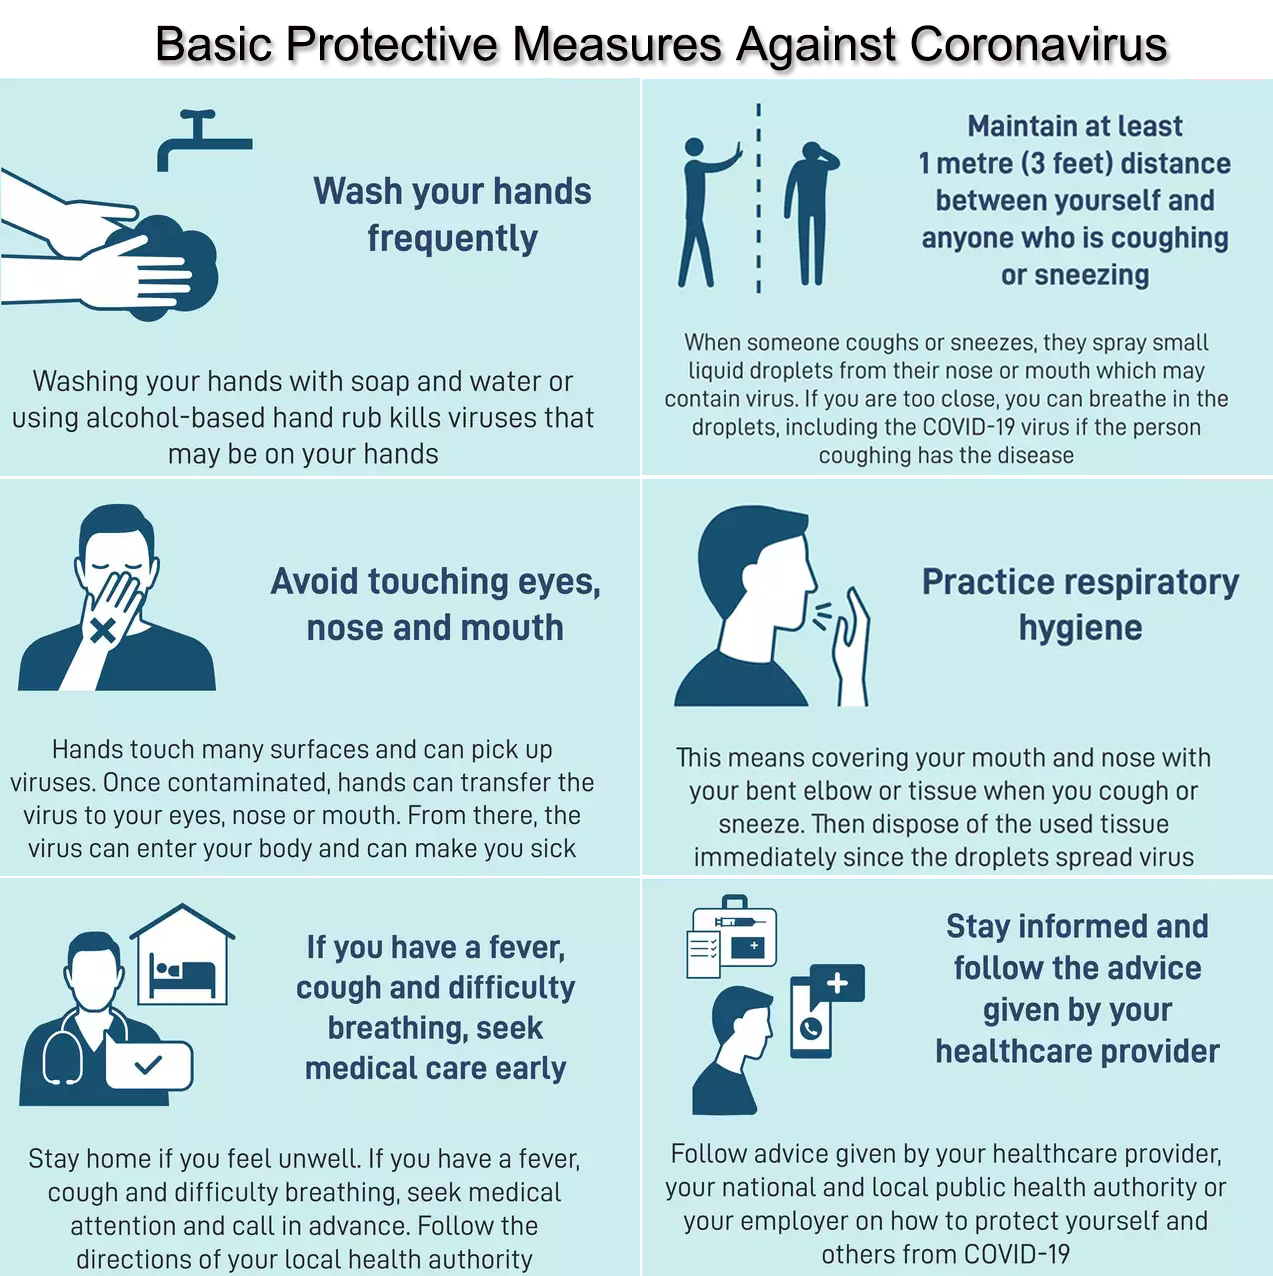 Basic protective measures against the novel coronavirus